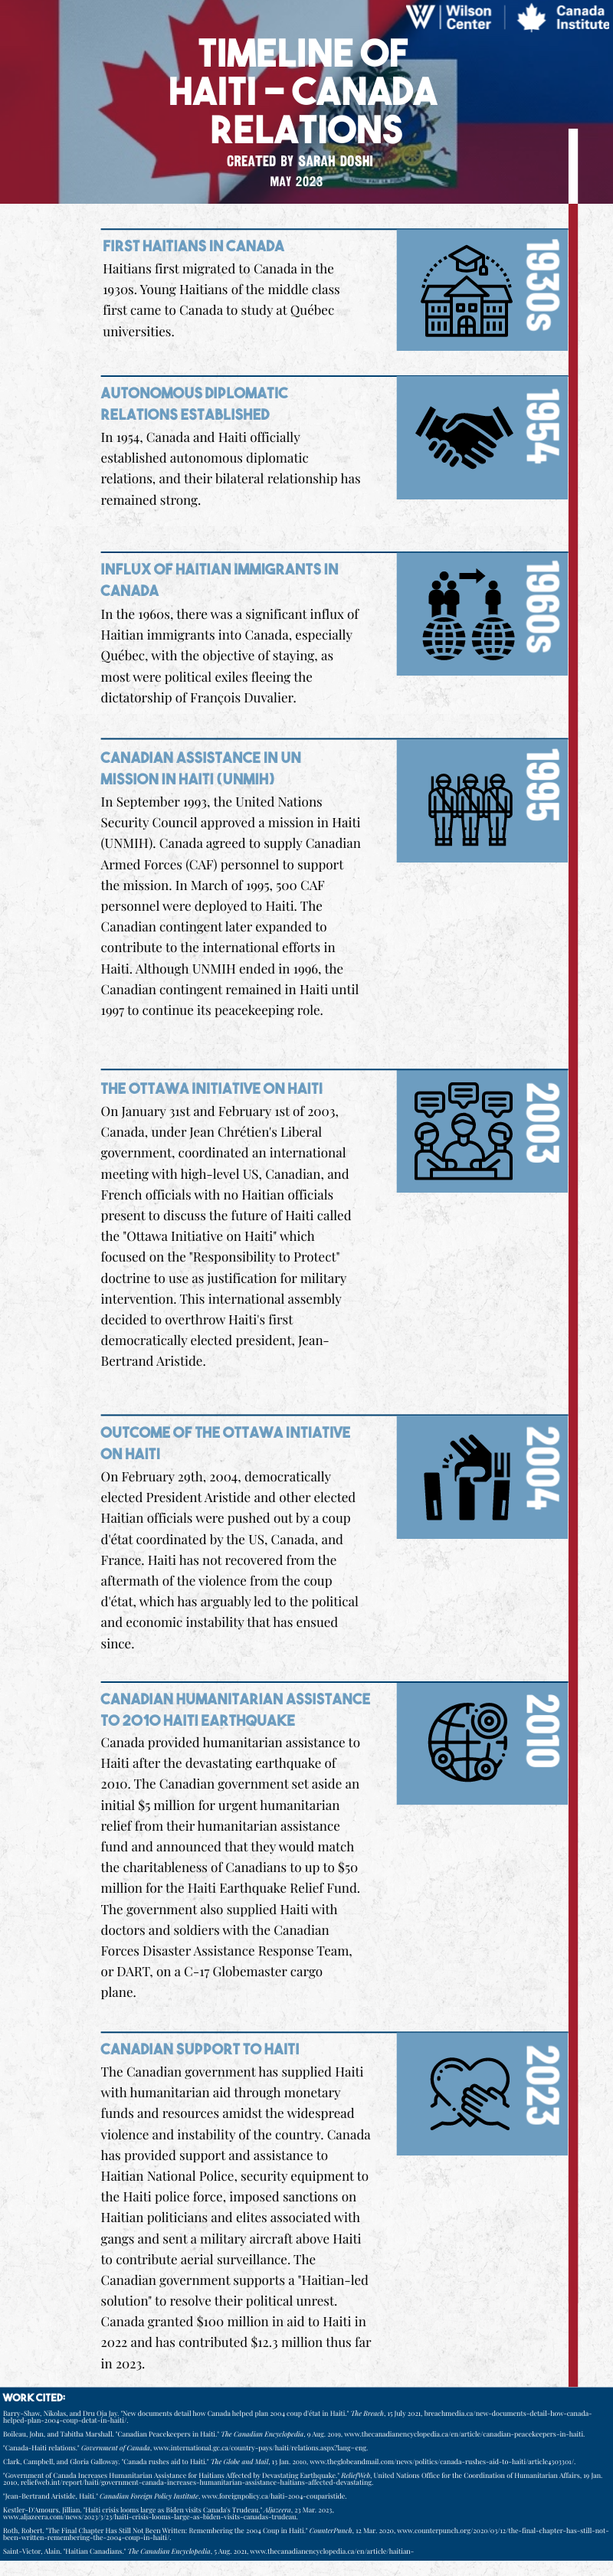 Canada Haiti Relations Timeline